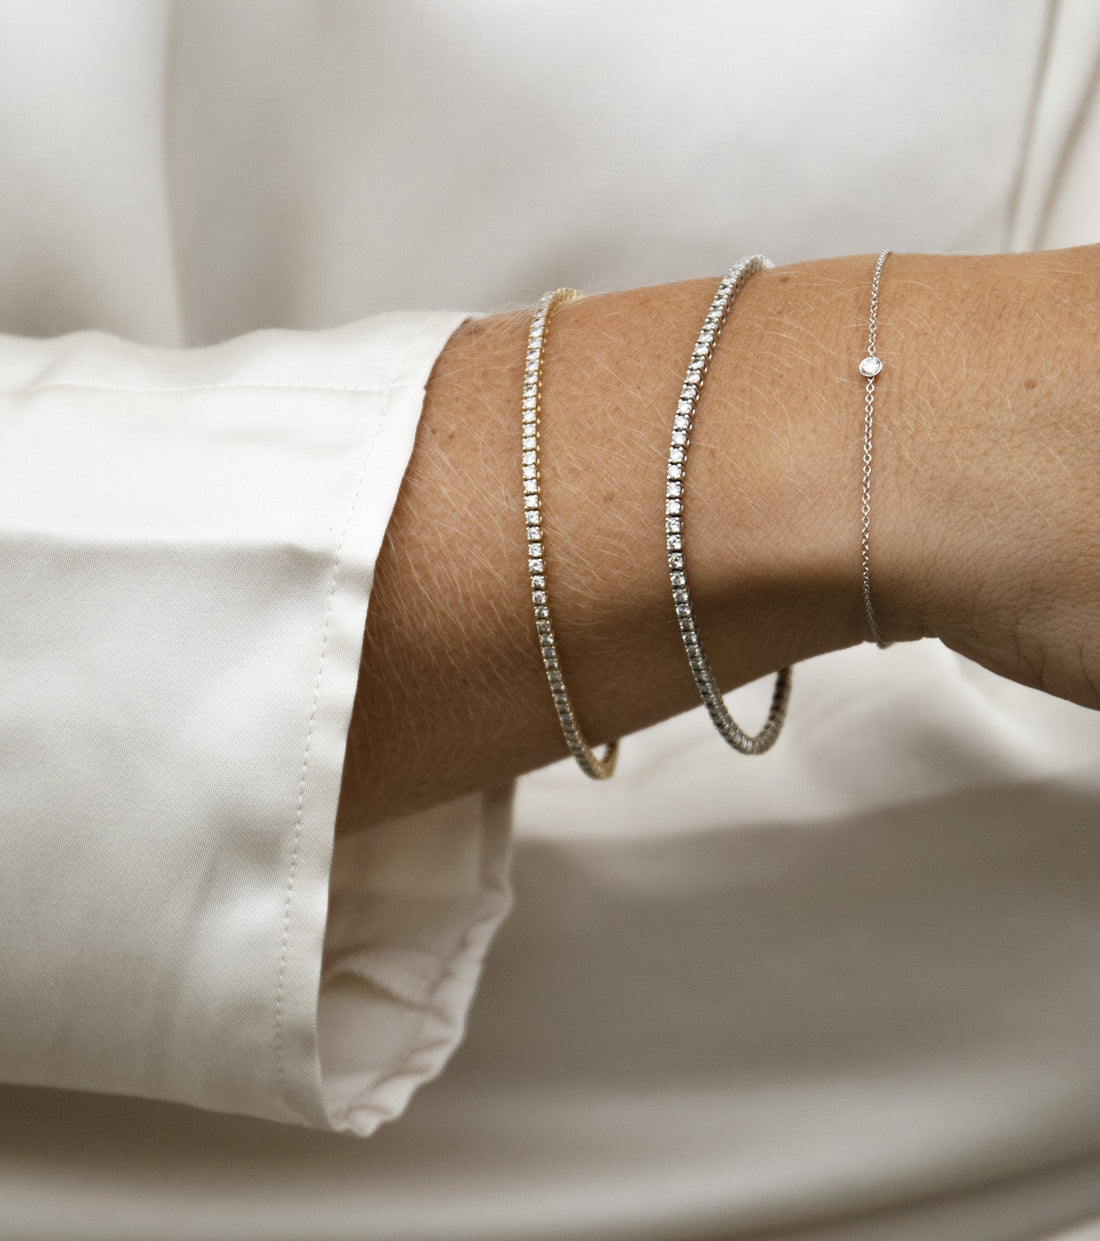 Ebba von Sydow Jewelry Tennisarmband Elise, 18k guld  - Diamantarmband - Diamond tennis bracelet Elise, 18k gold 